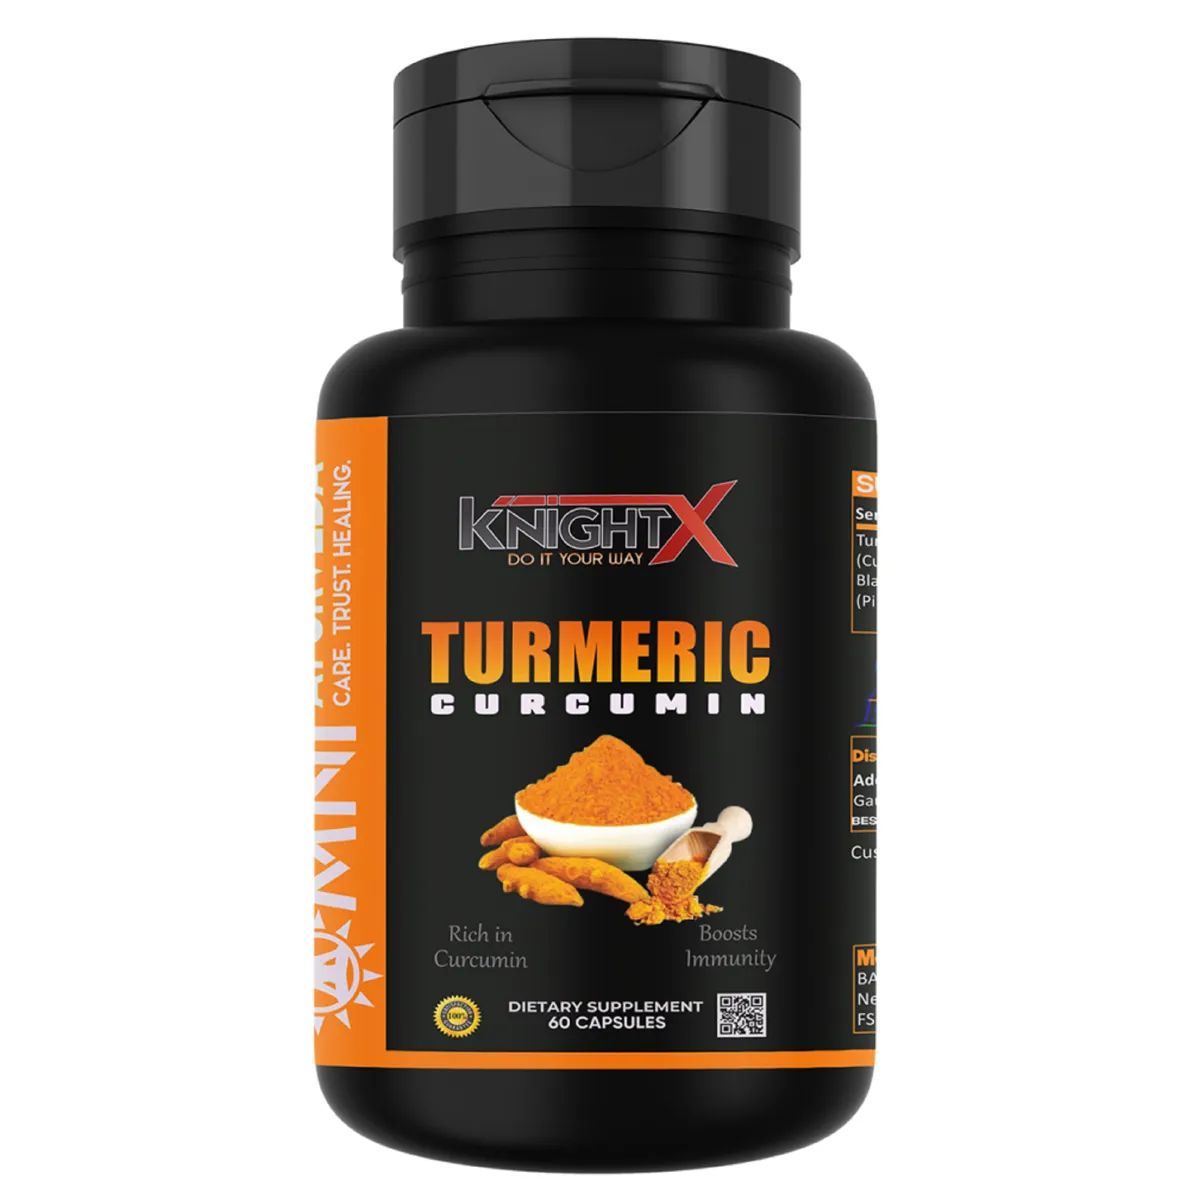 KnightX Turmeric Curcumin For Immunity, Good For Skin & Joints Pain 60caps